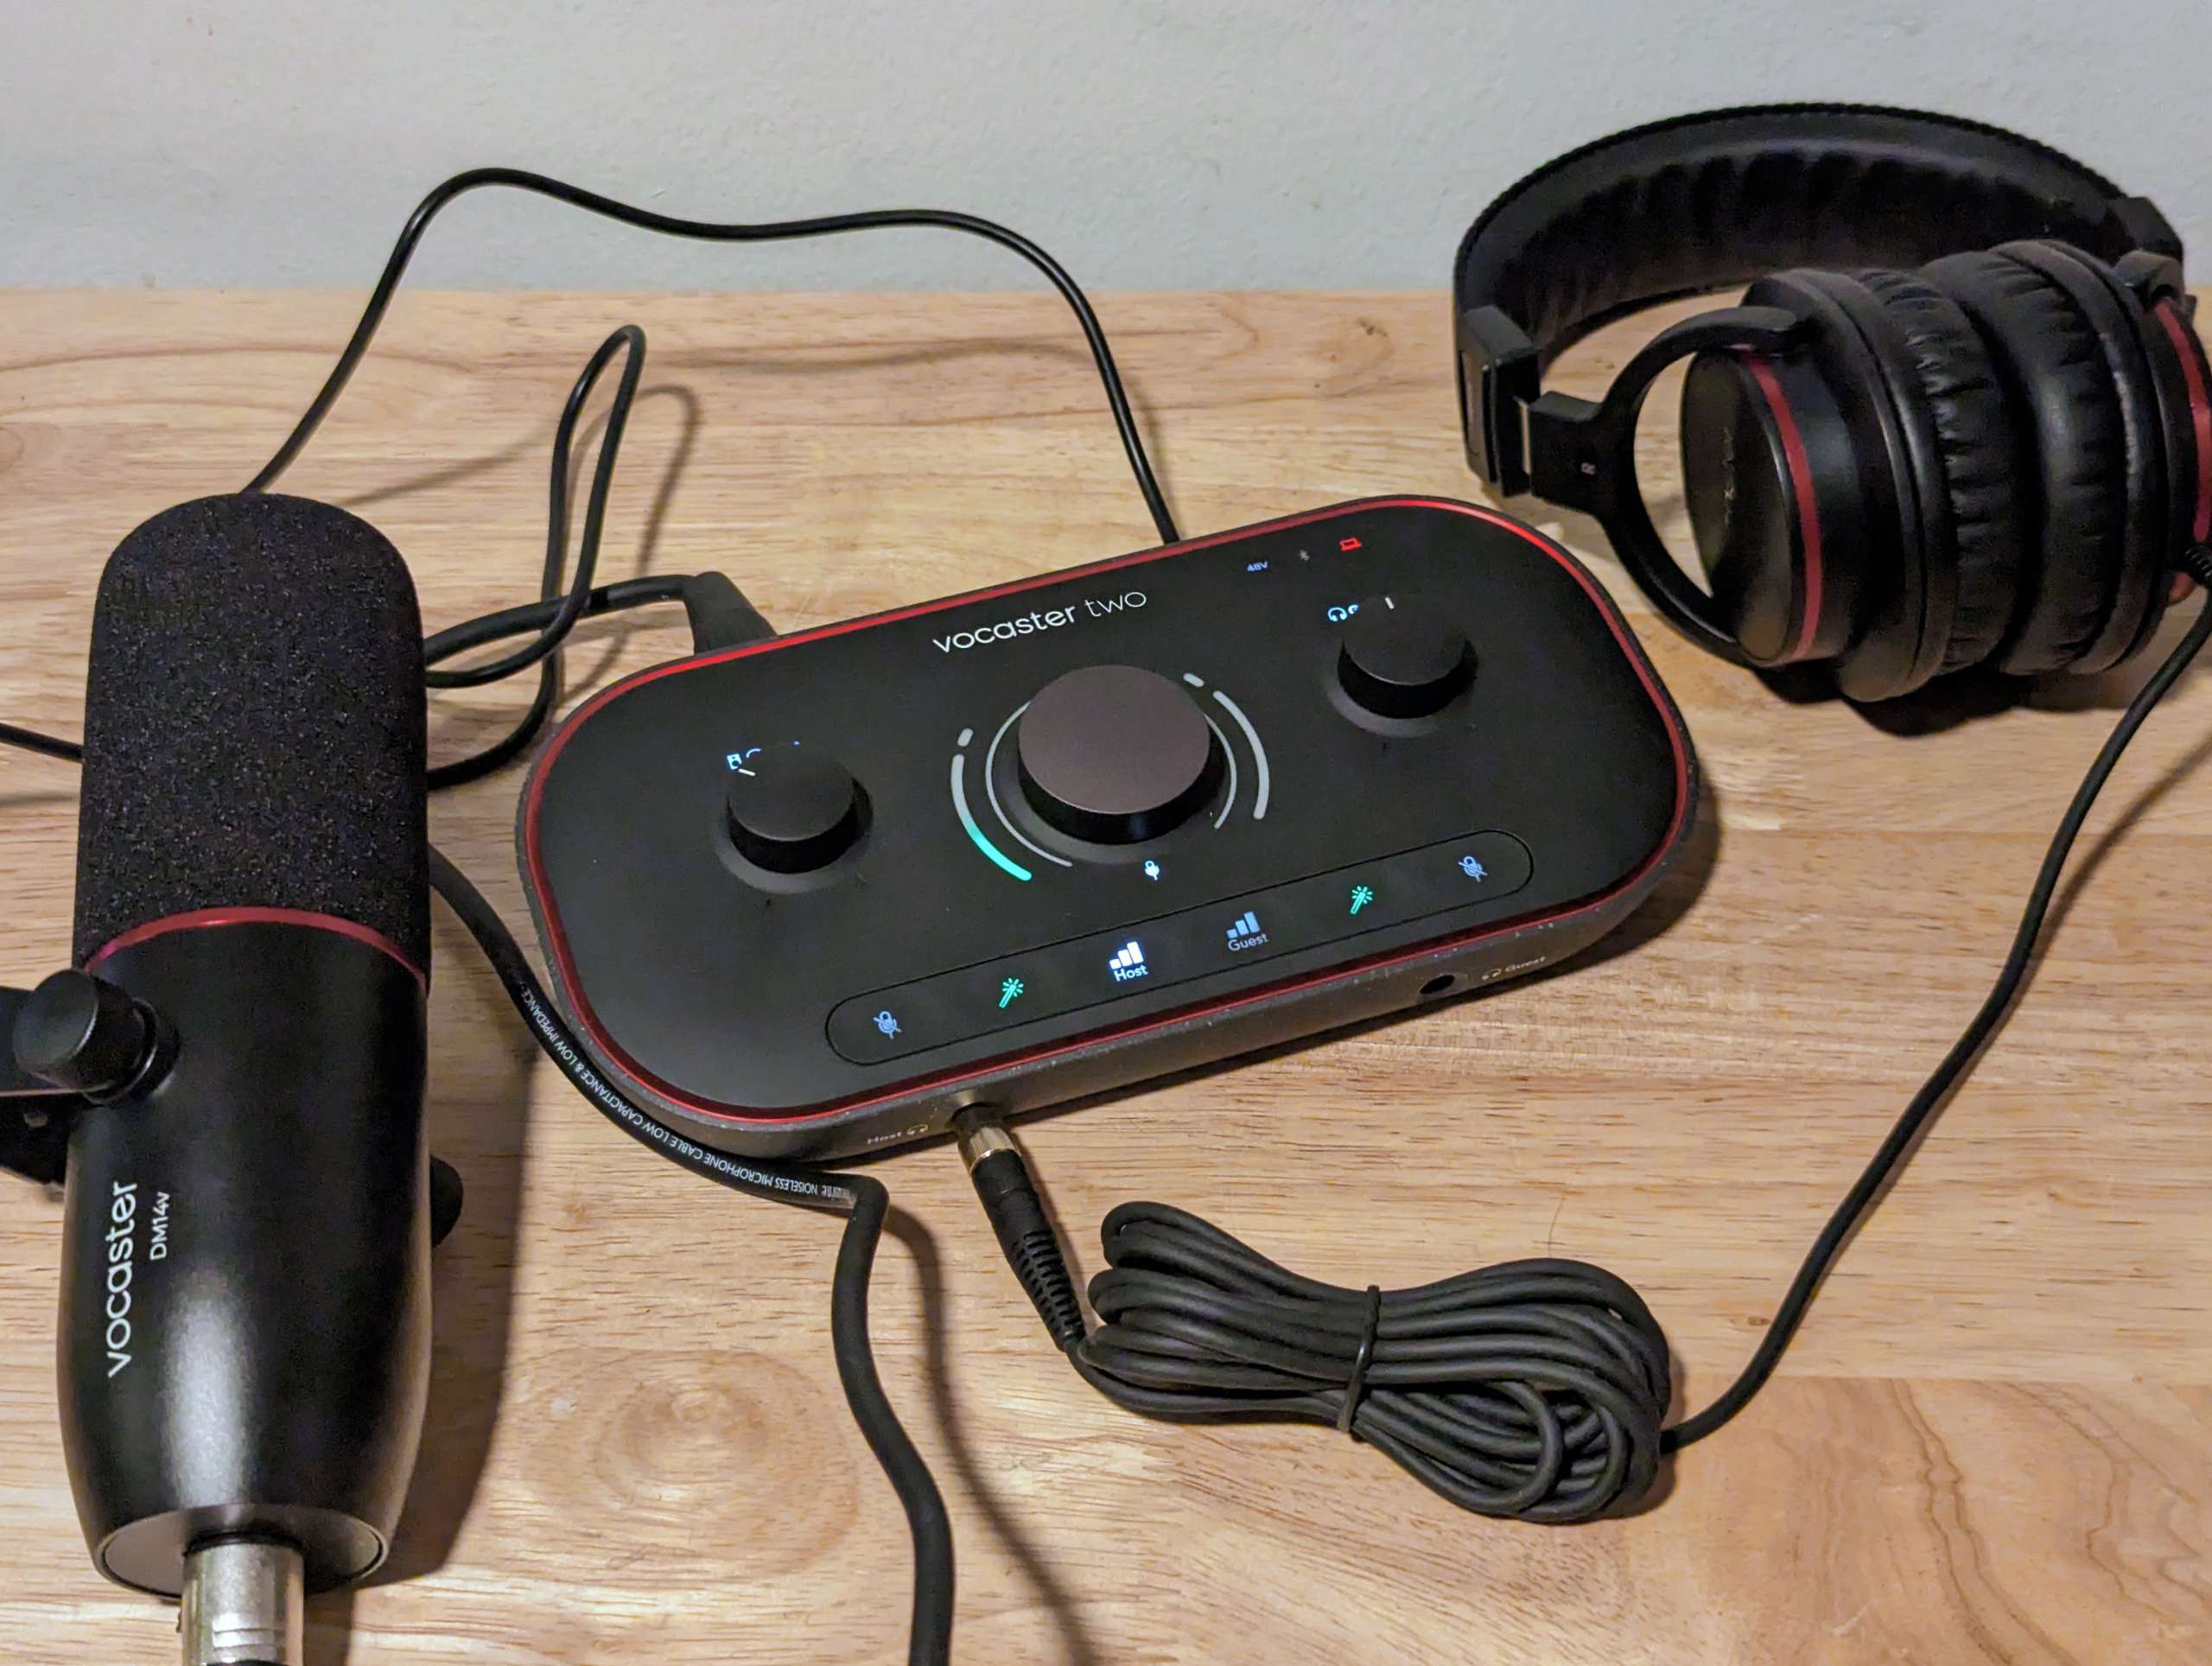 Focusrite Vocaster Two Studio Podcasting Kit review - Podcasting 